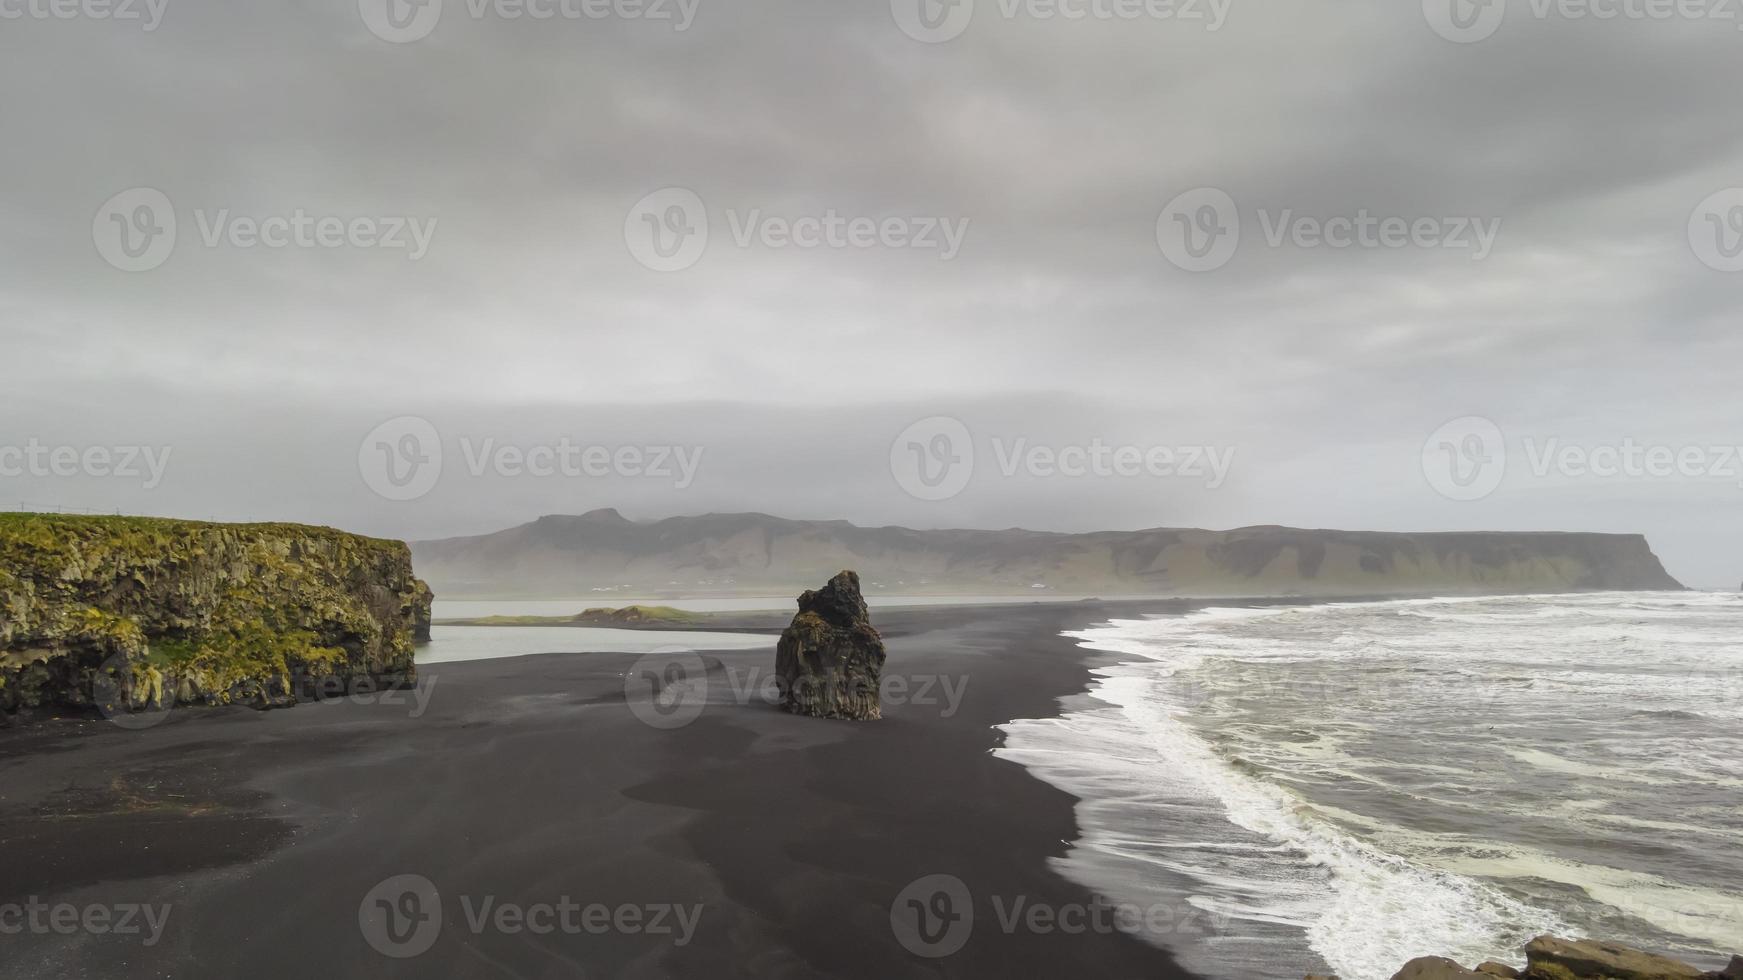 aereo Visualizza di nero sabbia reynisfjara spiaggia nel meridionale Islanda foto